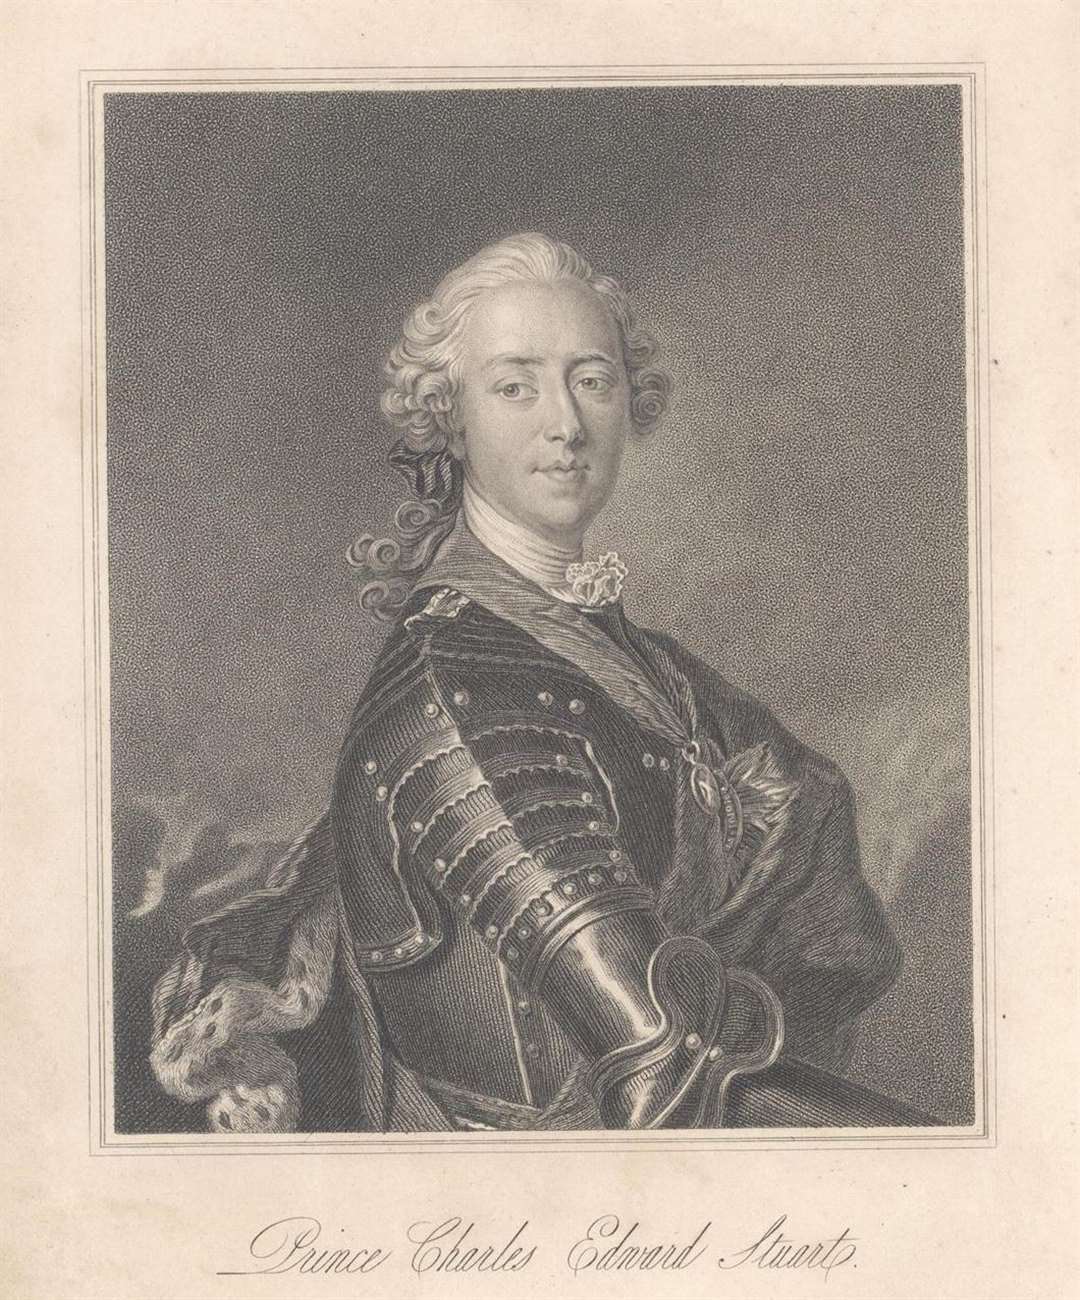 An etching of Prince Charles Edward Stuart